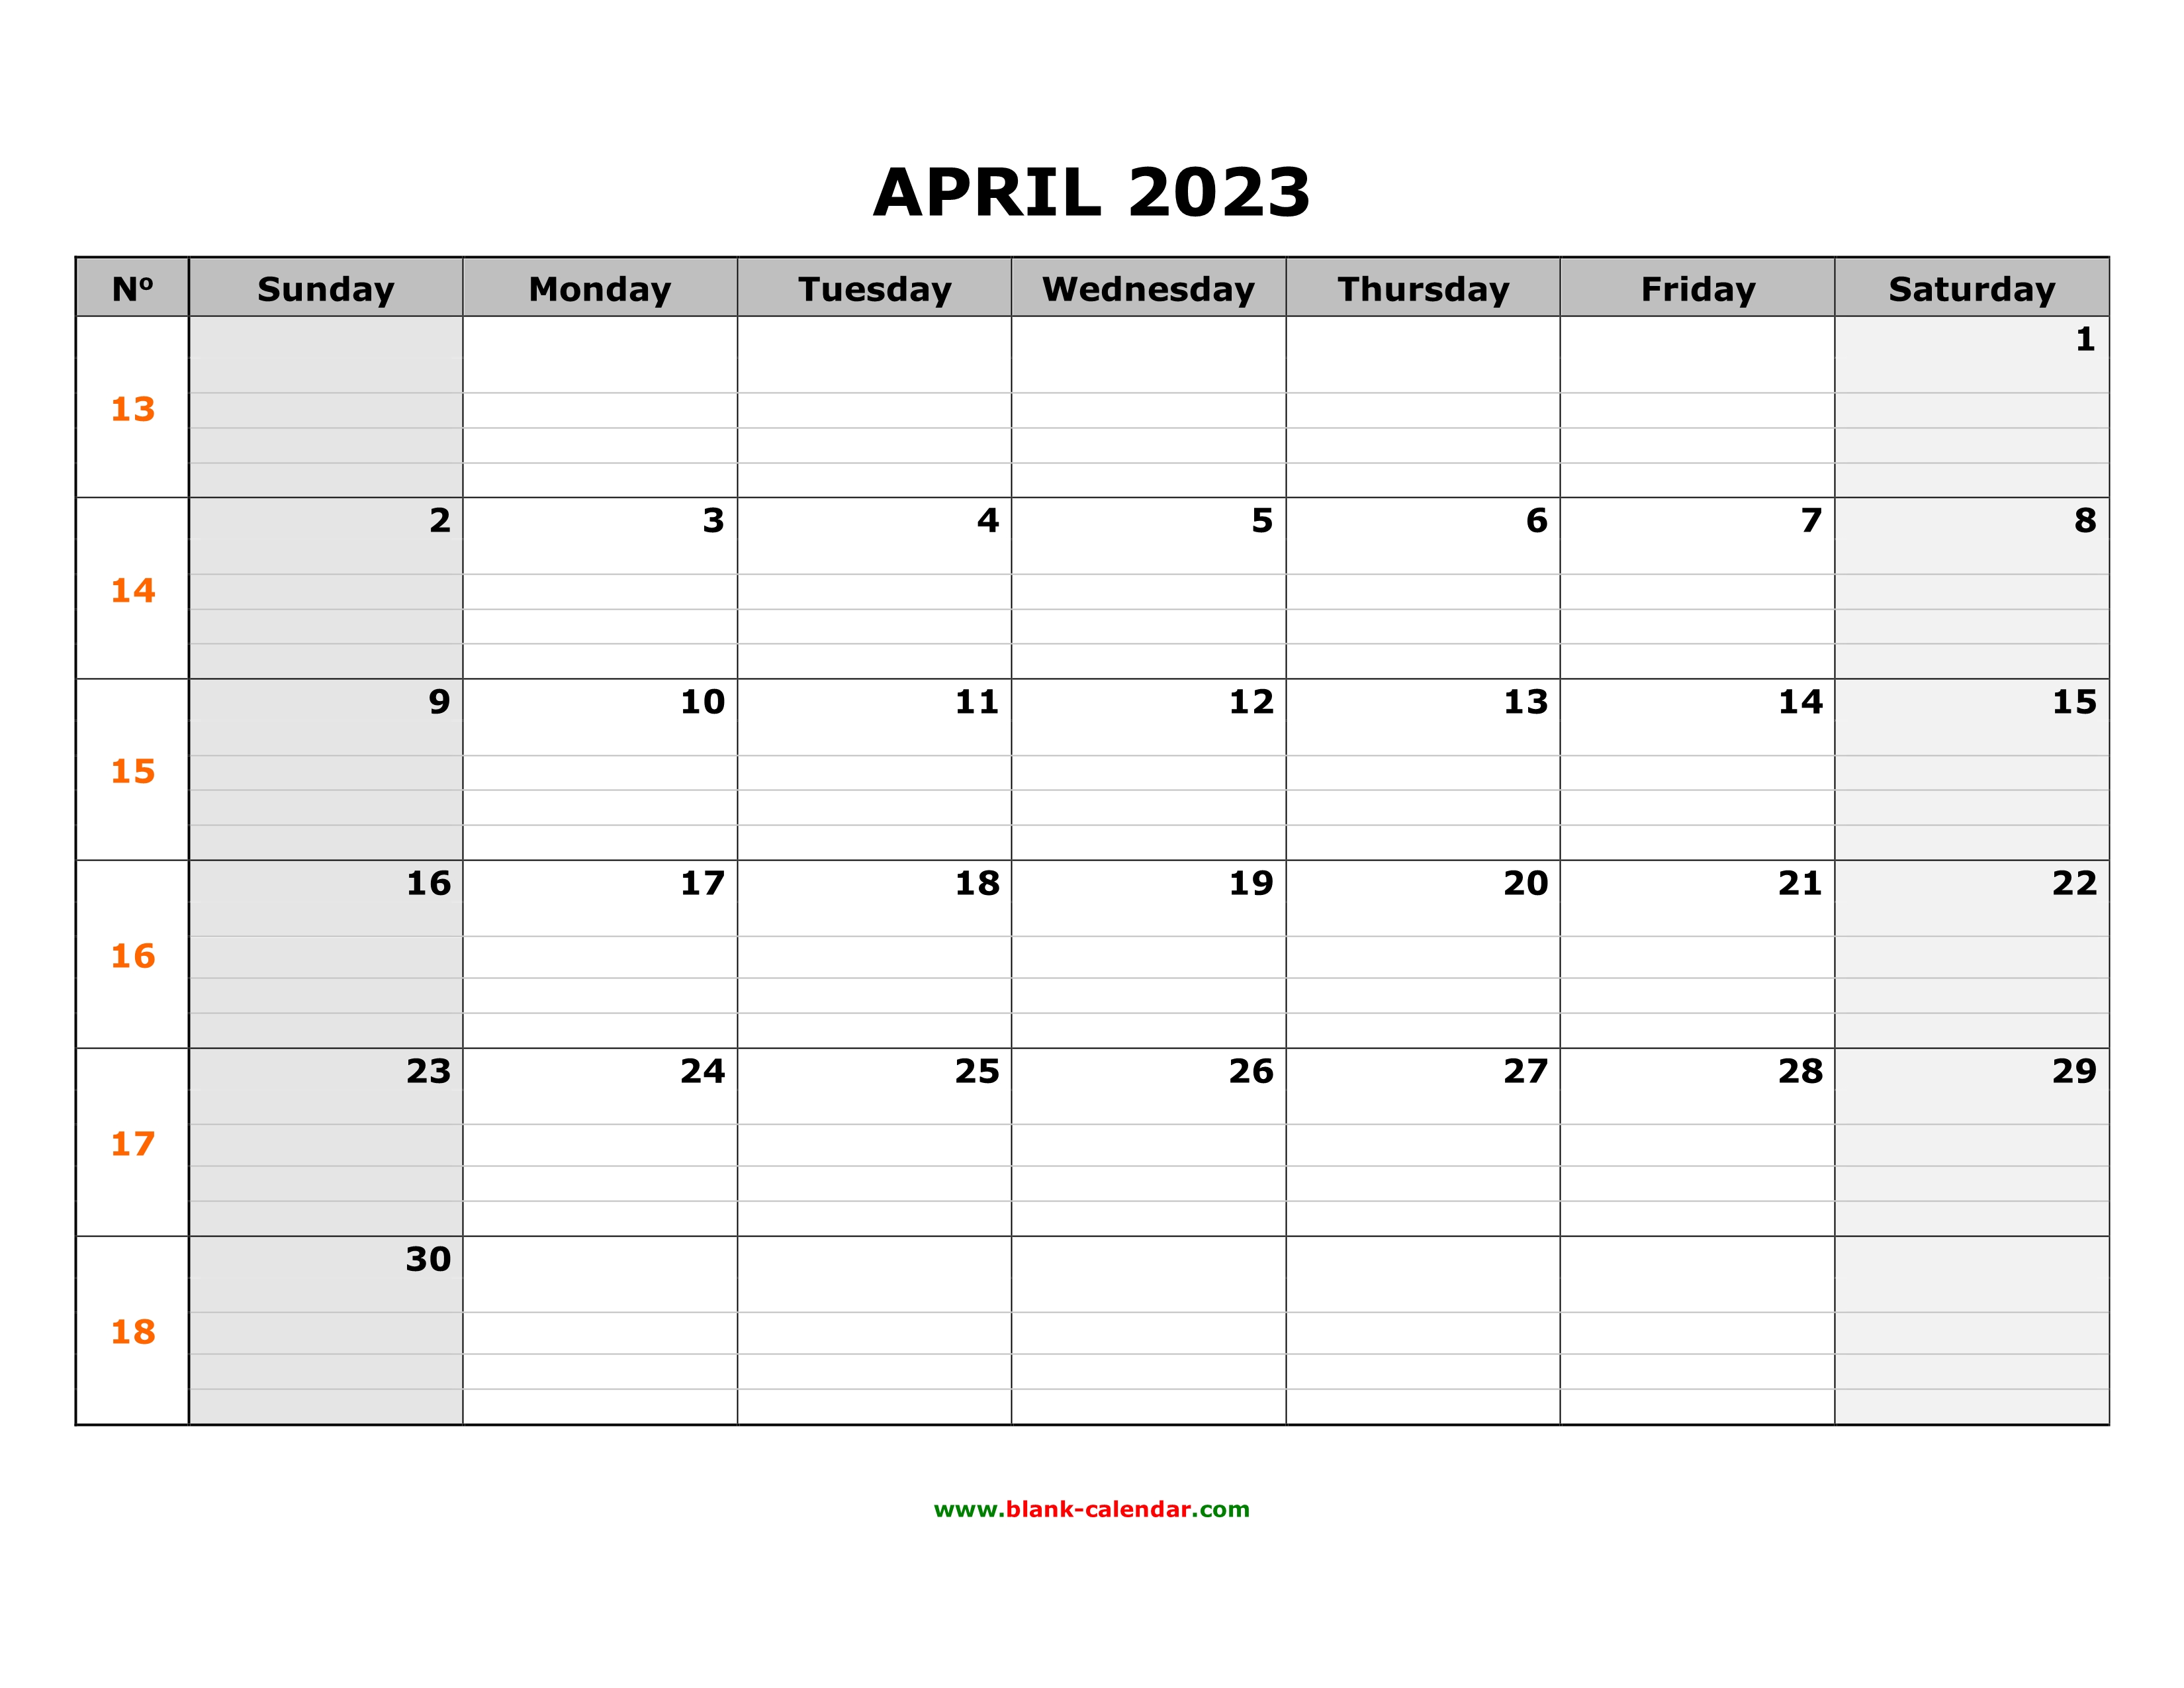 April 2023 Large Print Calendar Get Latest Map Update